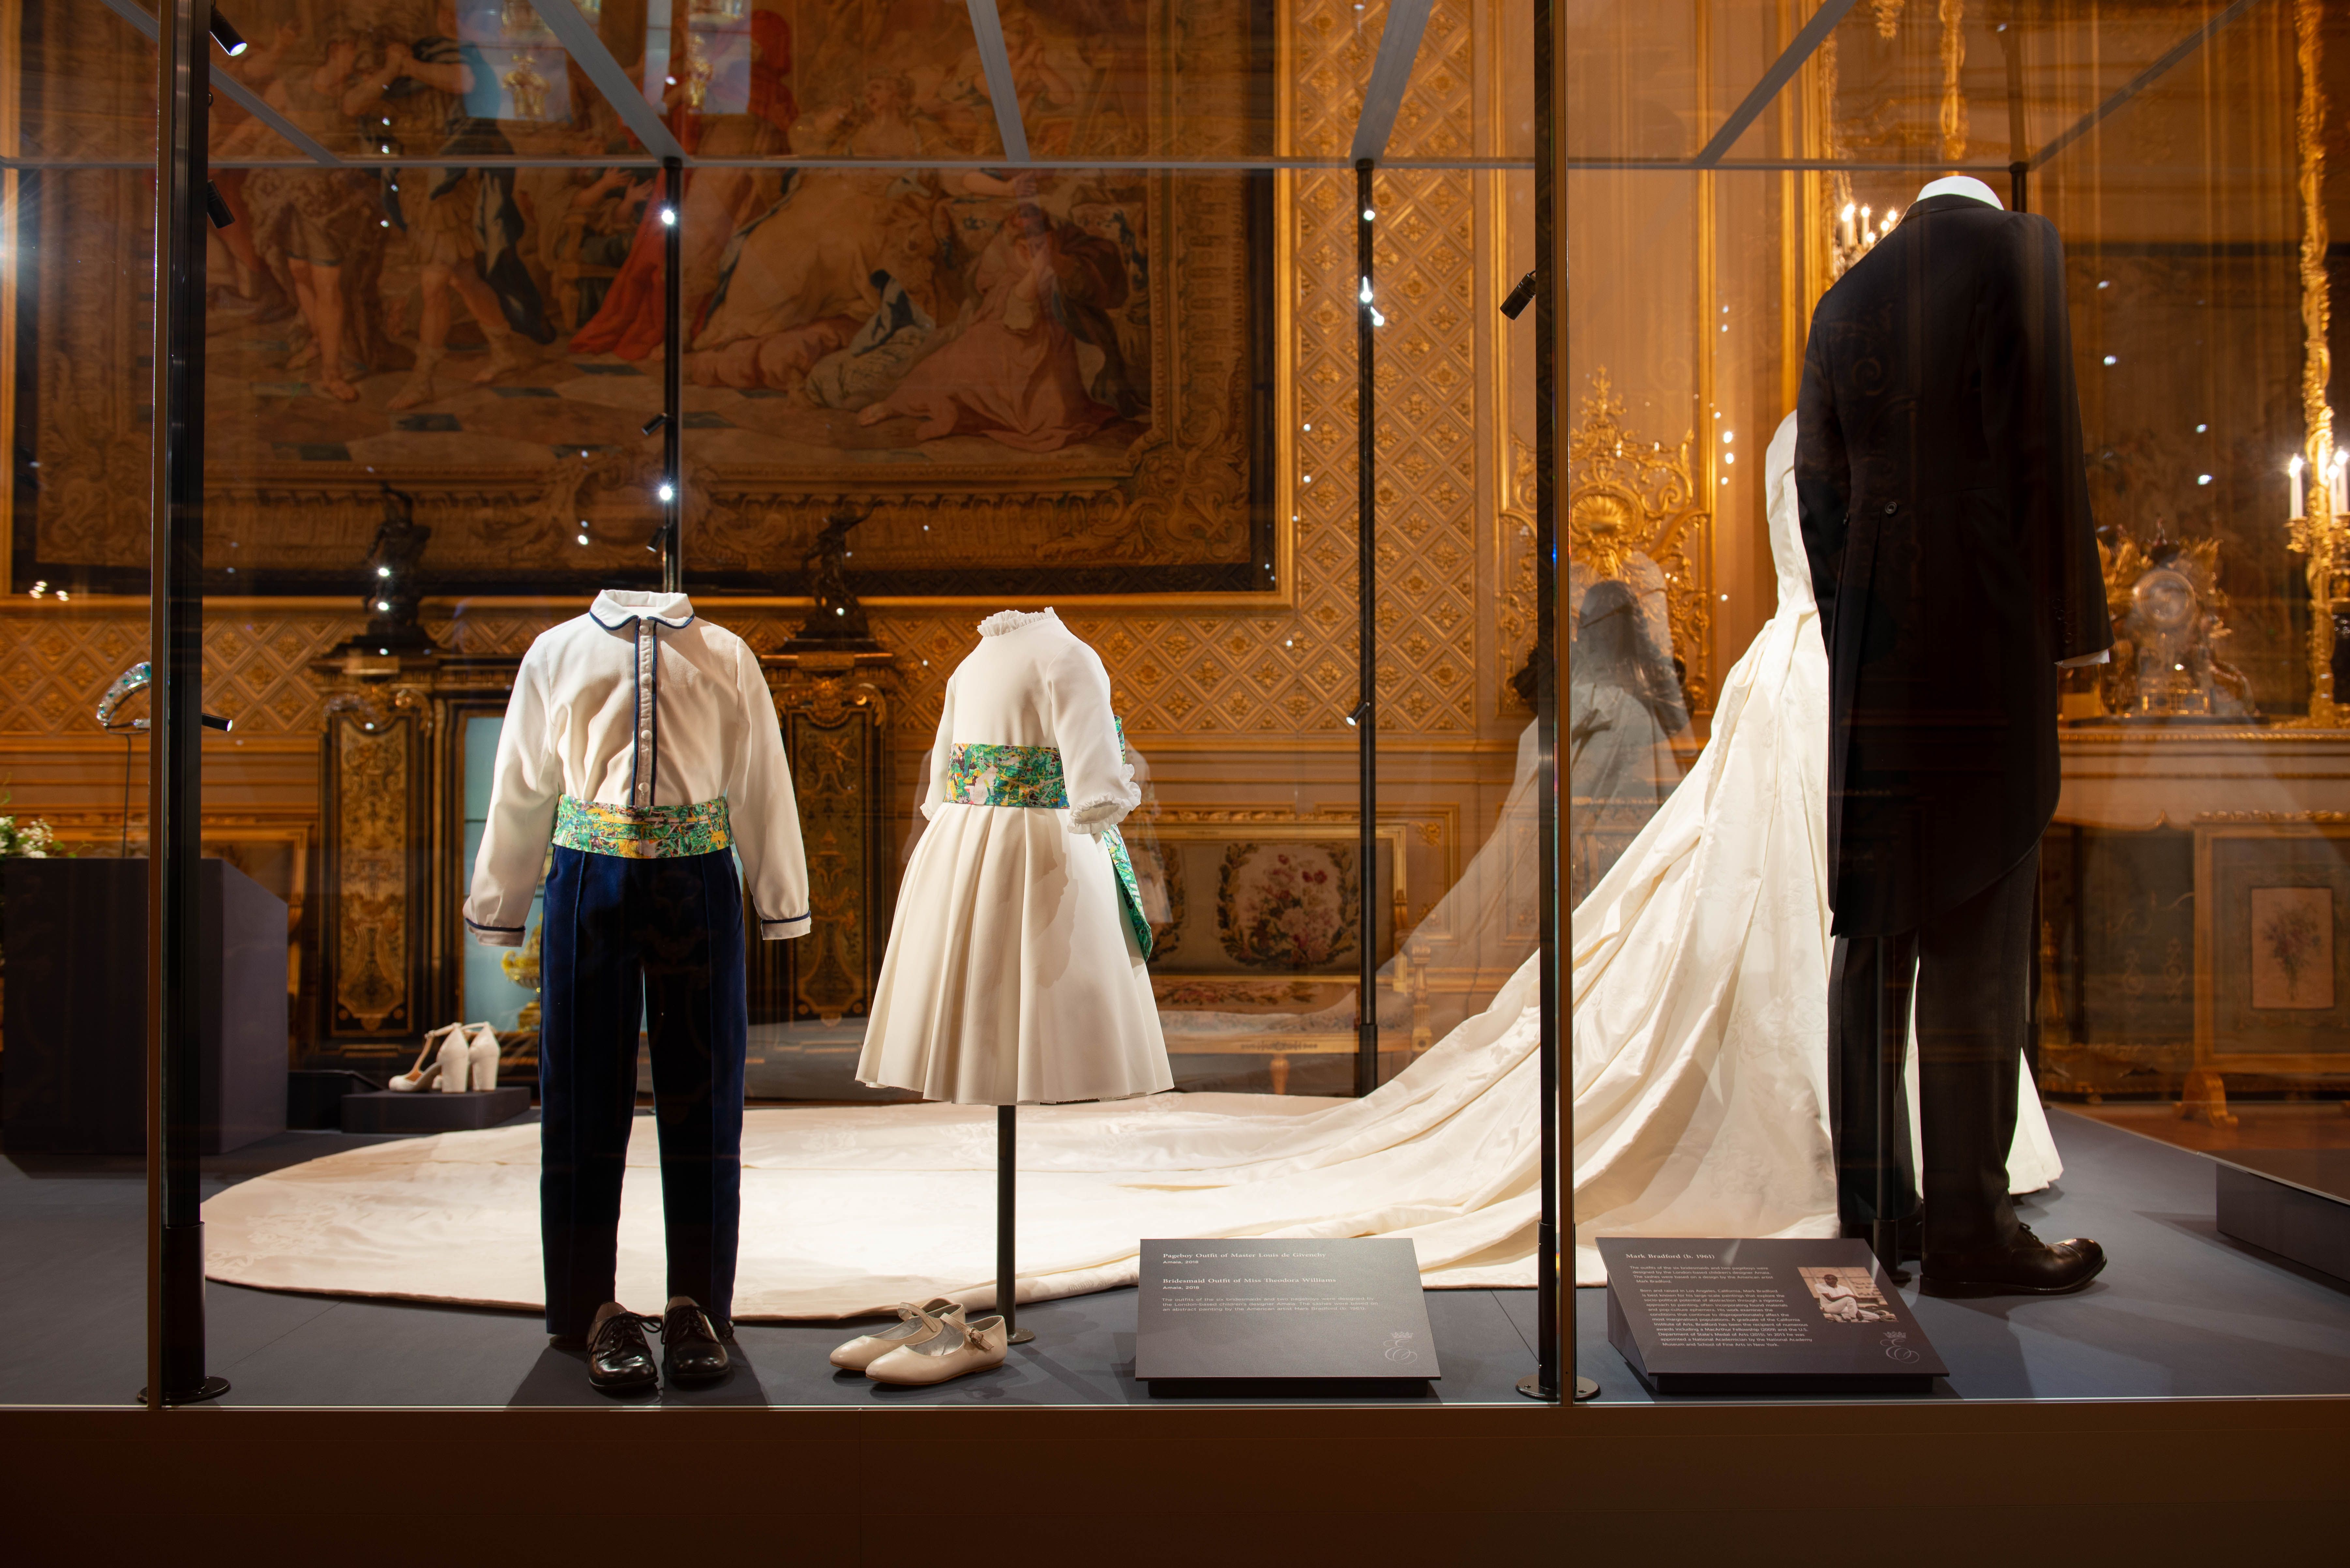 Meghan Markle's Wedding Dress On Display - Inside The Duke and